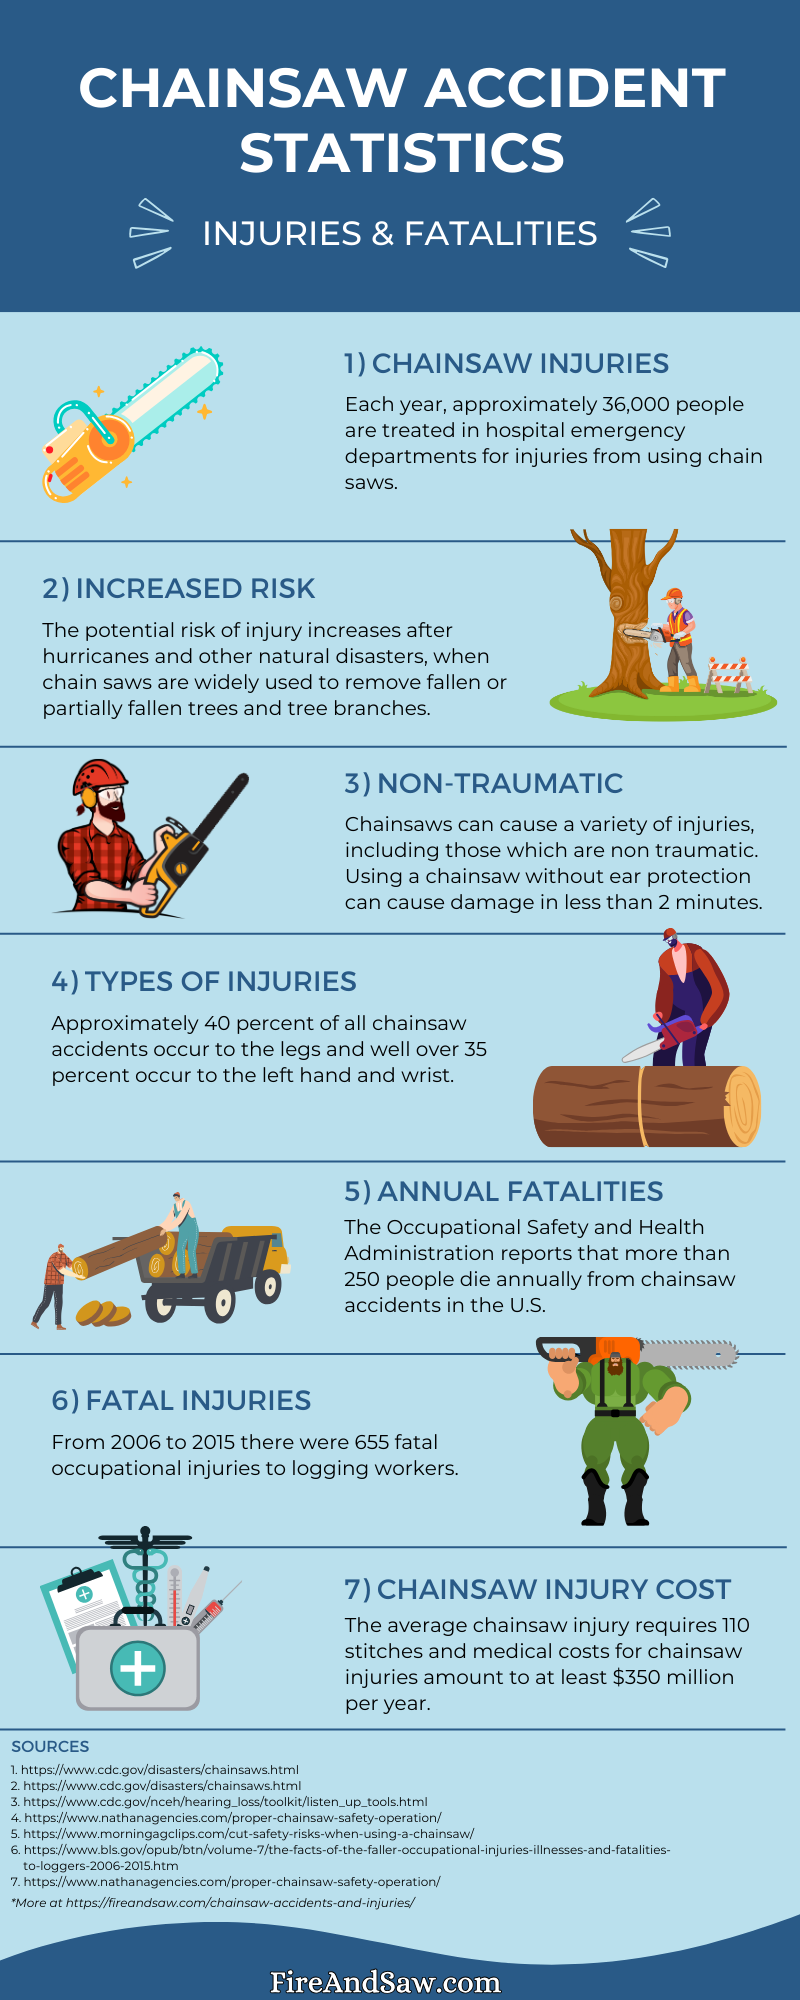 chainsaw accident statistics